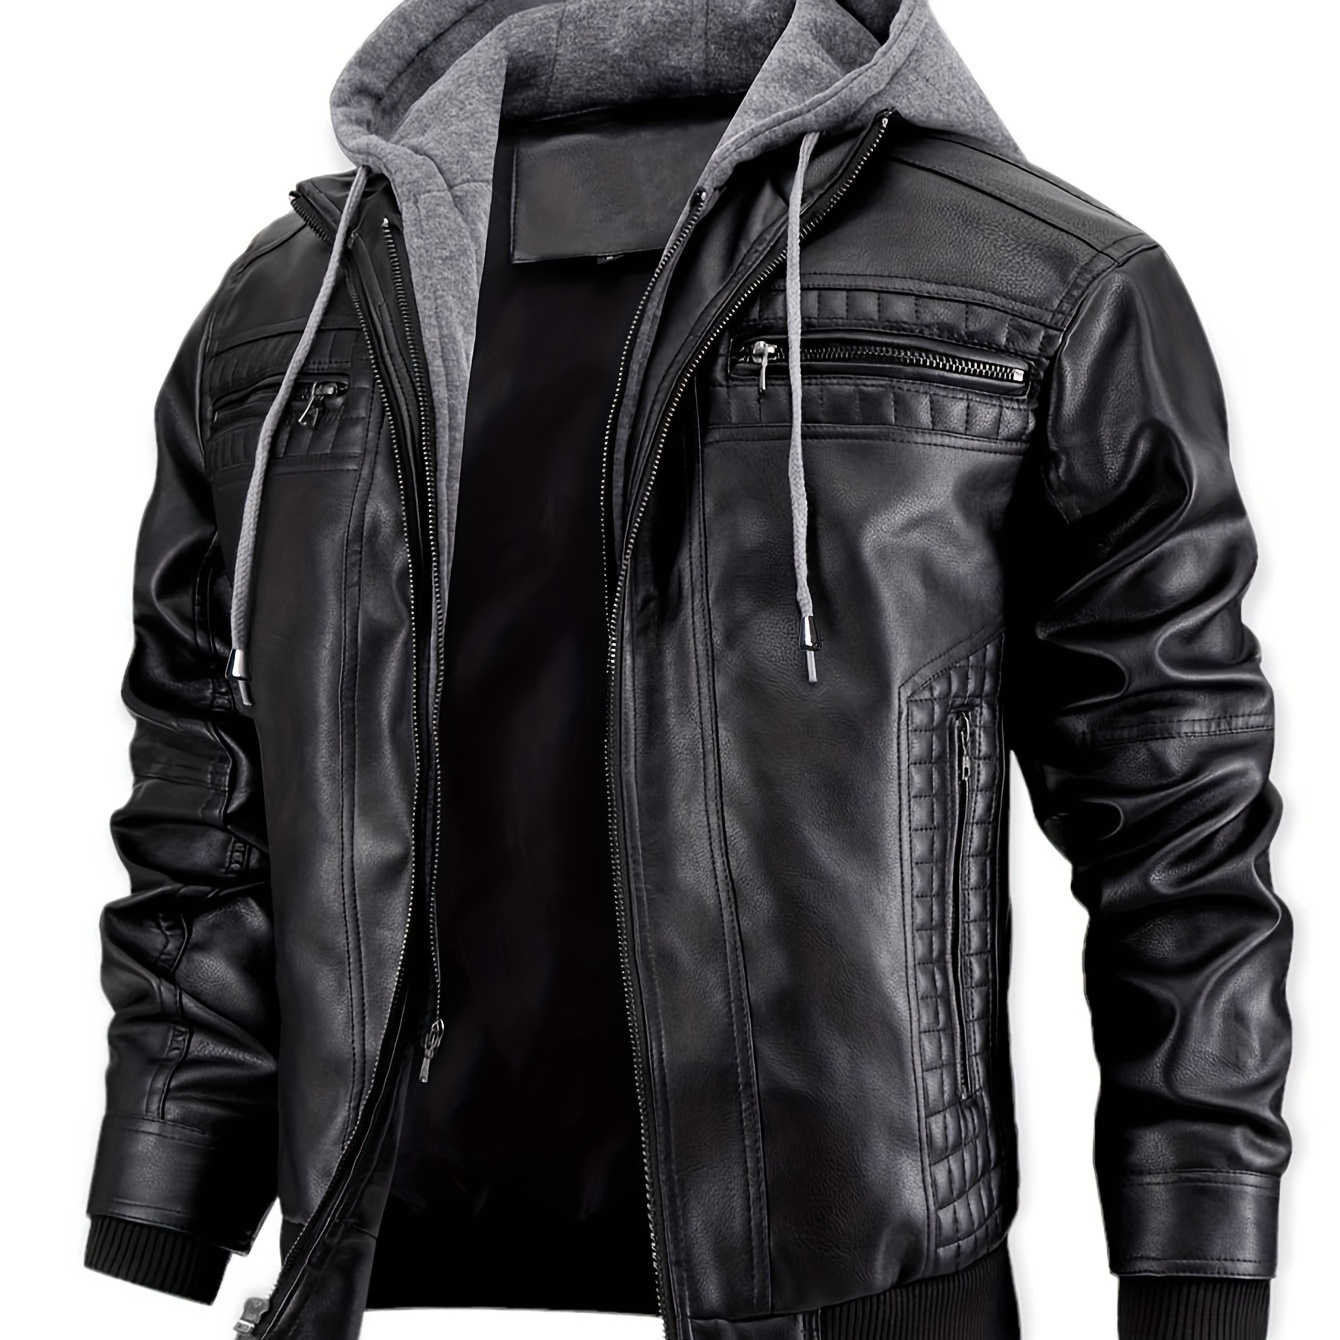 

Men's Casual 2 In 1 Pu Leather Jacket, Chic Jacket Biker Jacket With Zipper Pockets